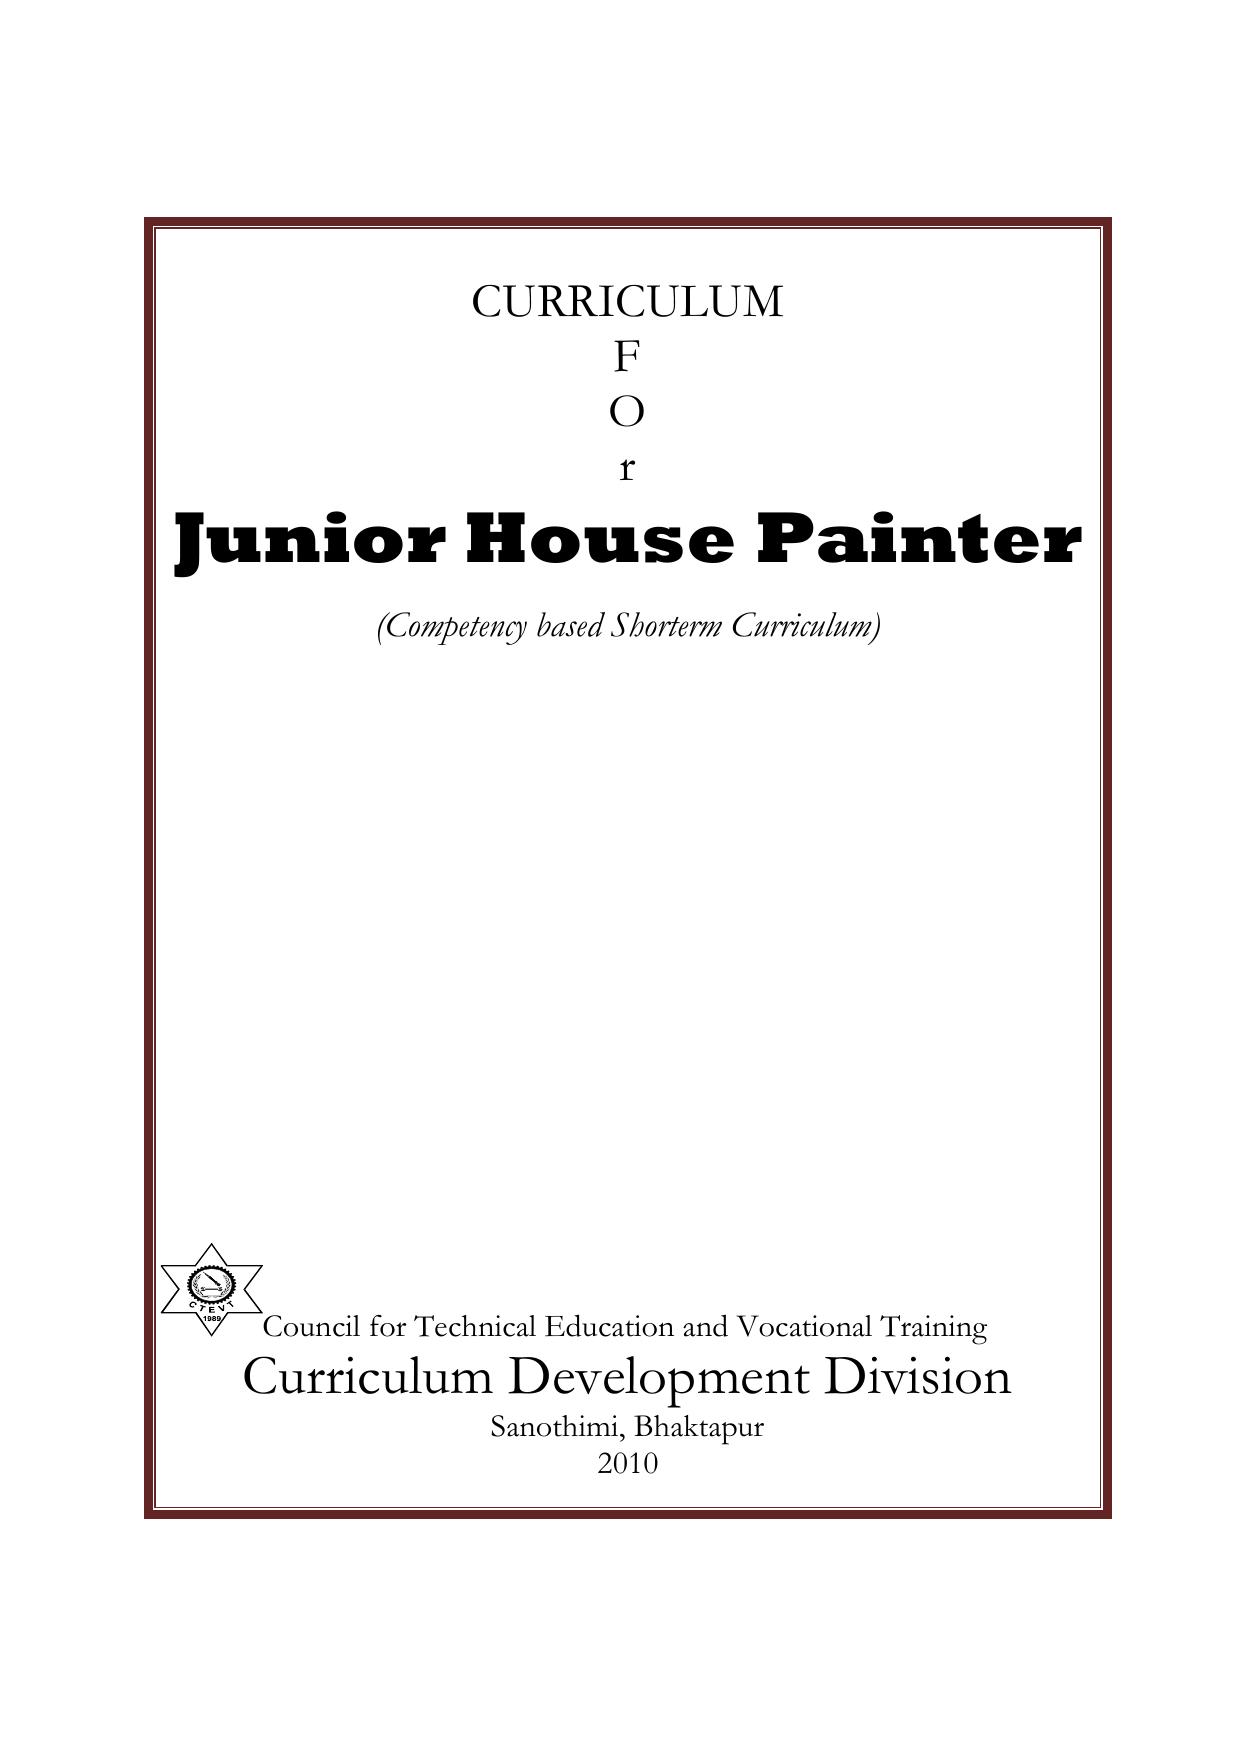 Junior House Painter, 2010